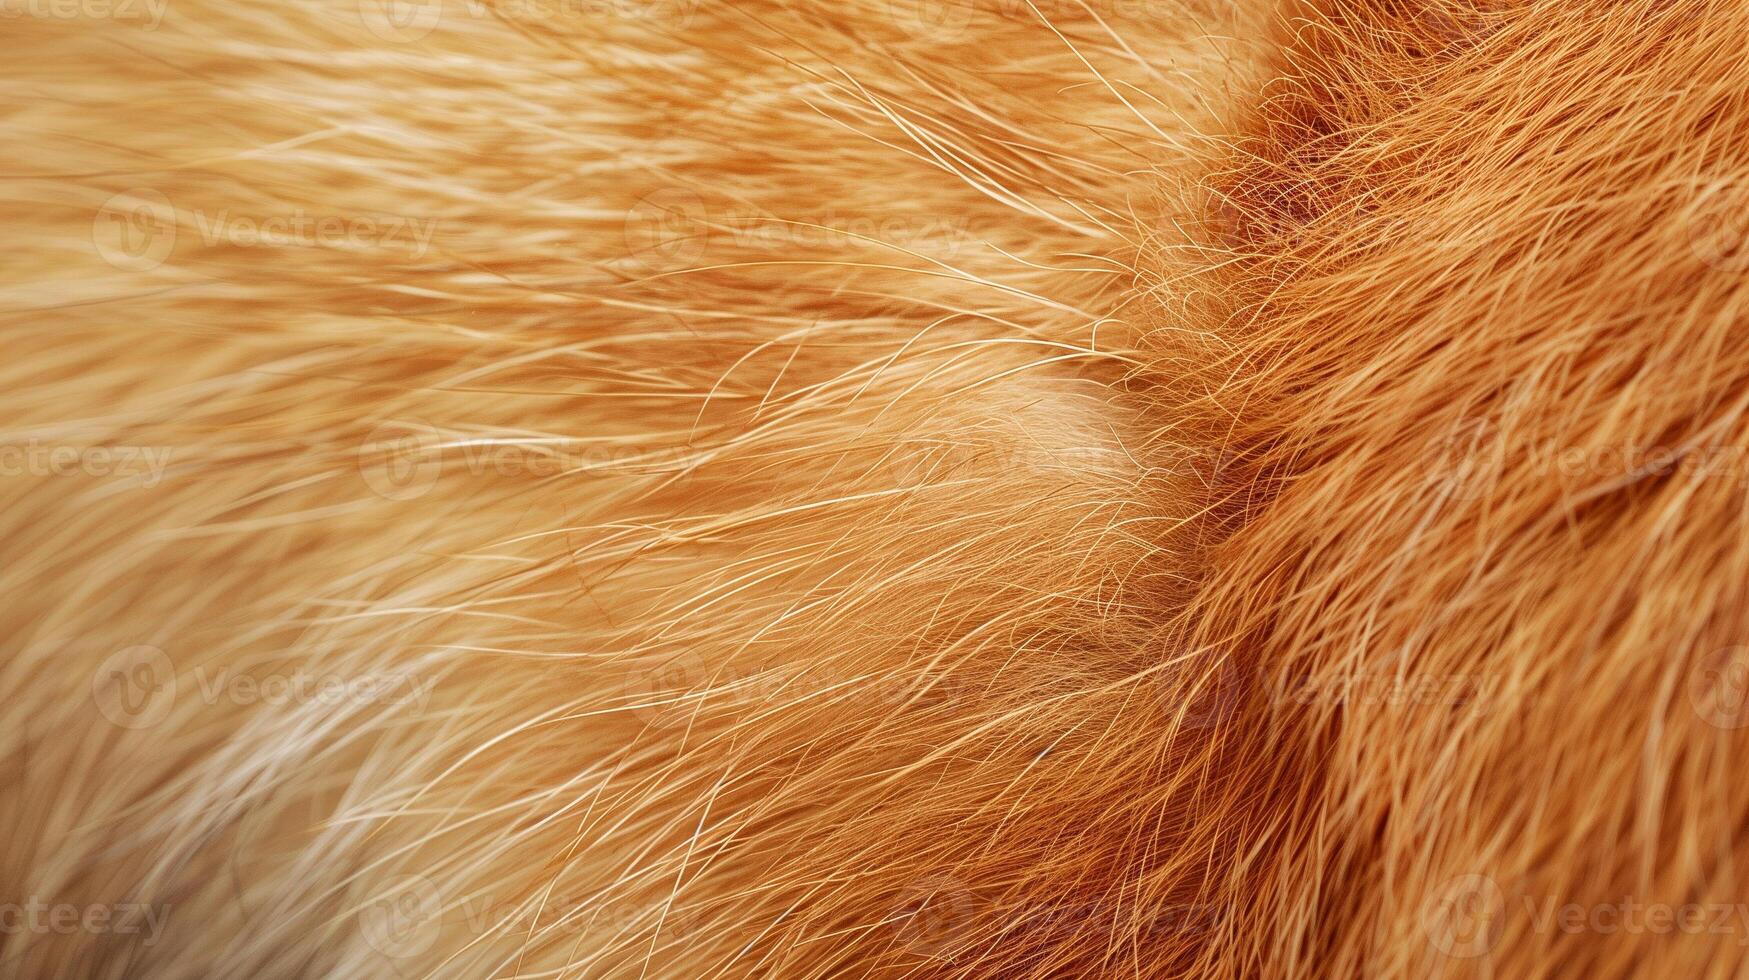 AI generated a light orange fawn color fur photo